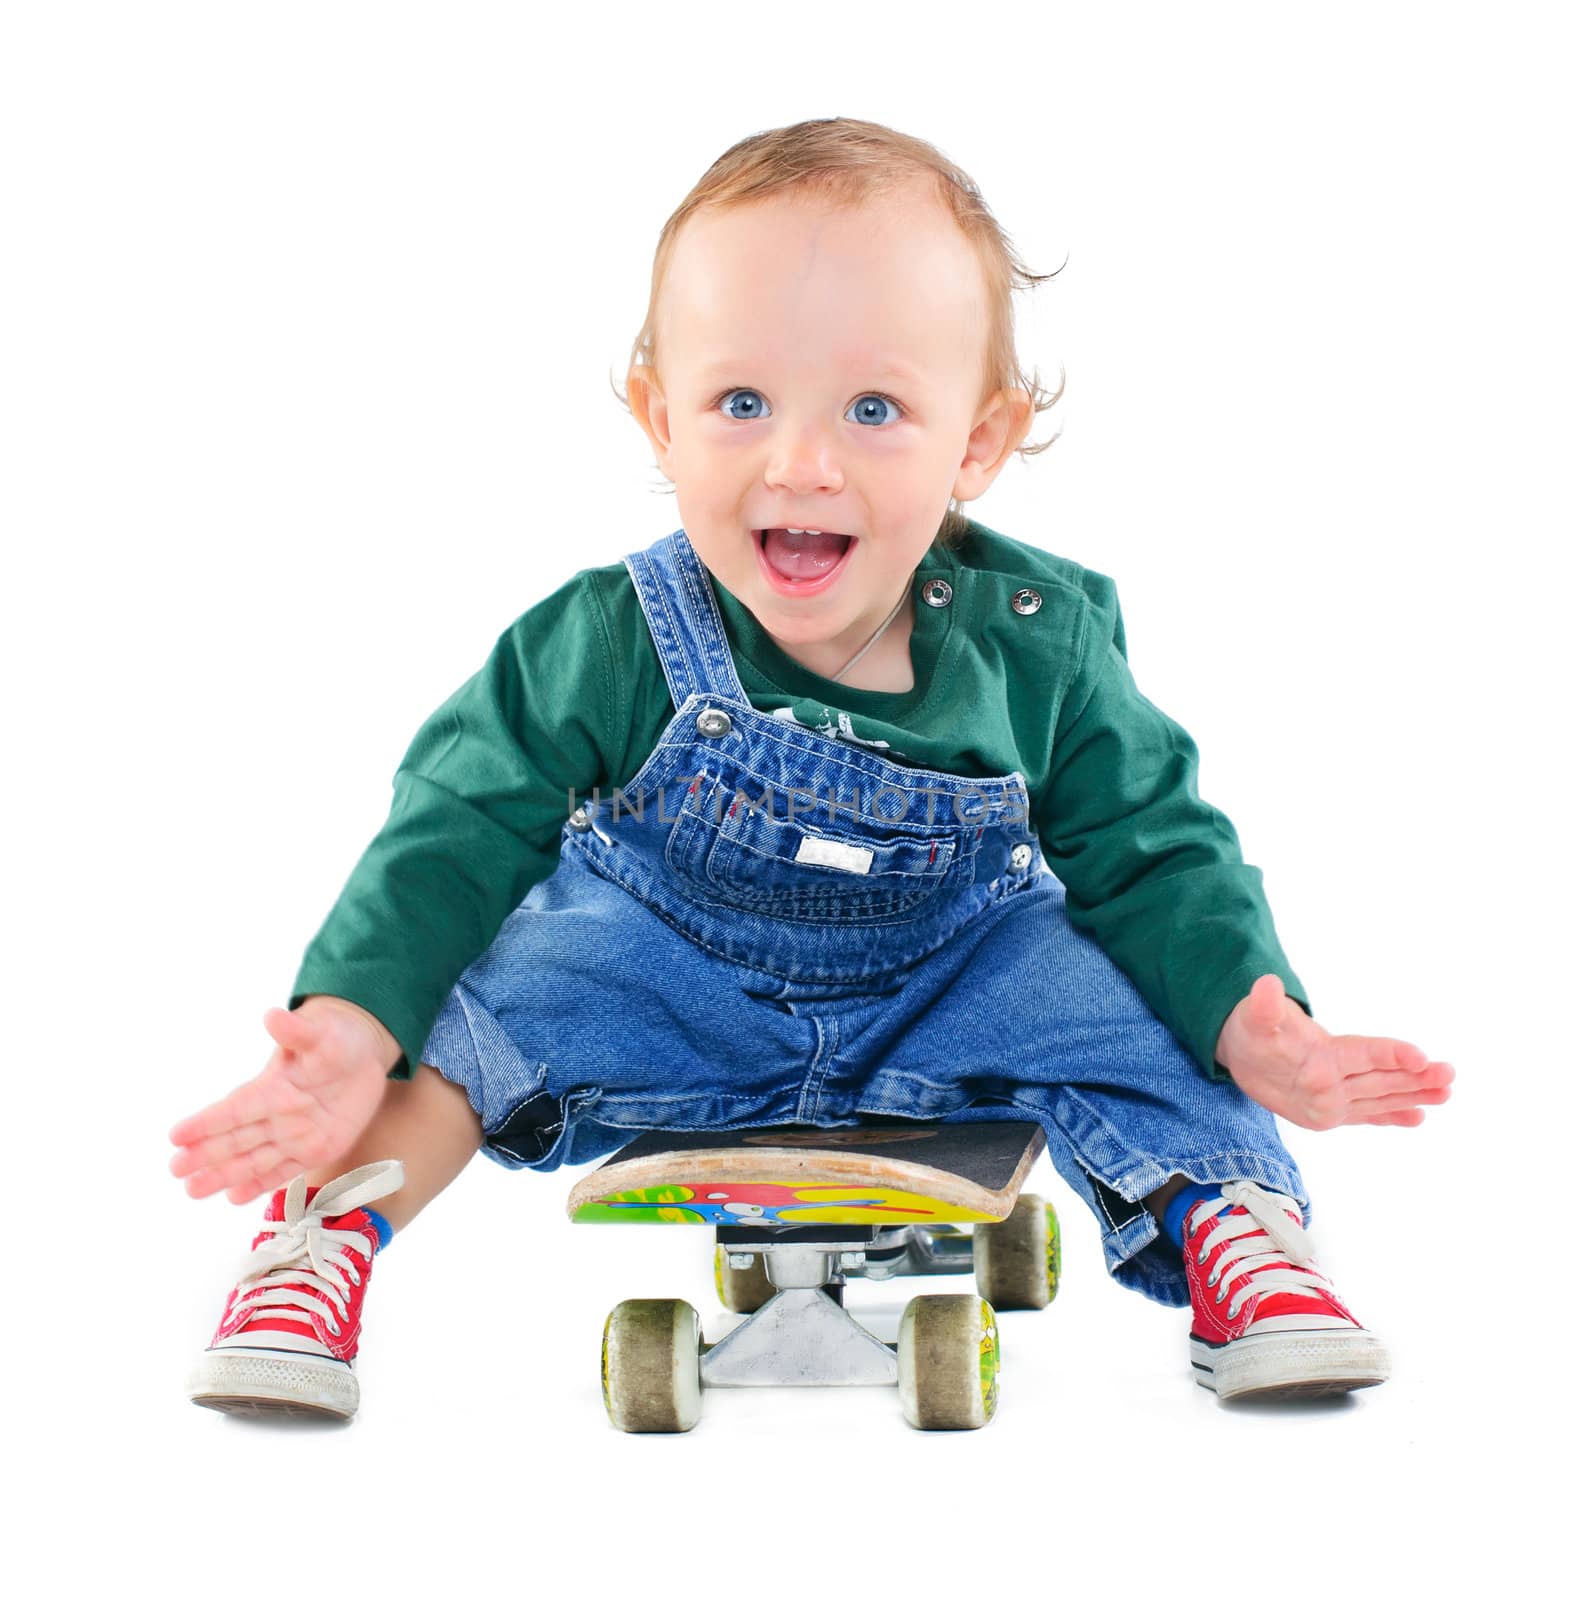 Cute 1 years old boy on a skateboard in the studio